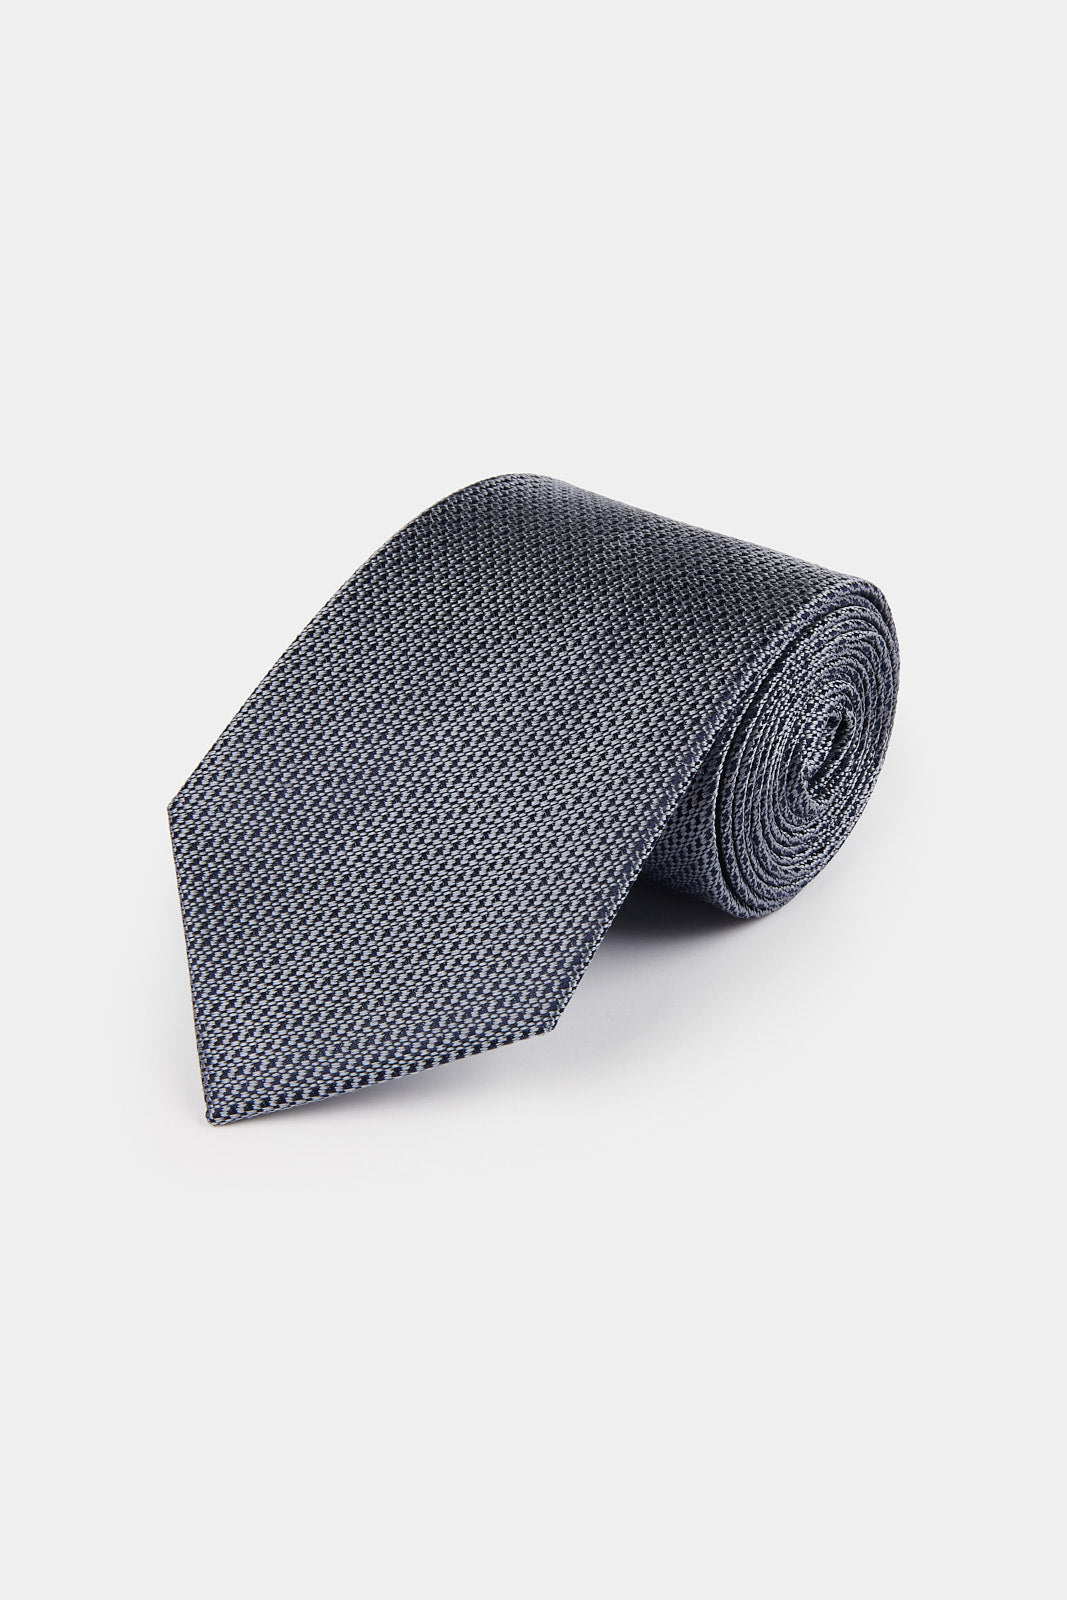 Silk Grenadine Tie in Navy Blue